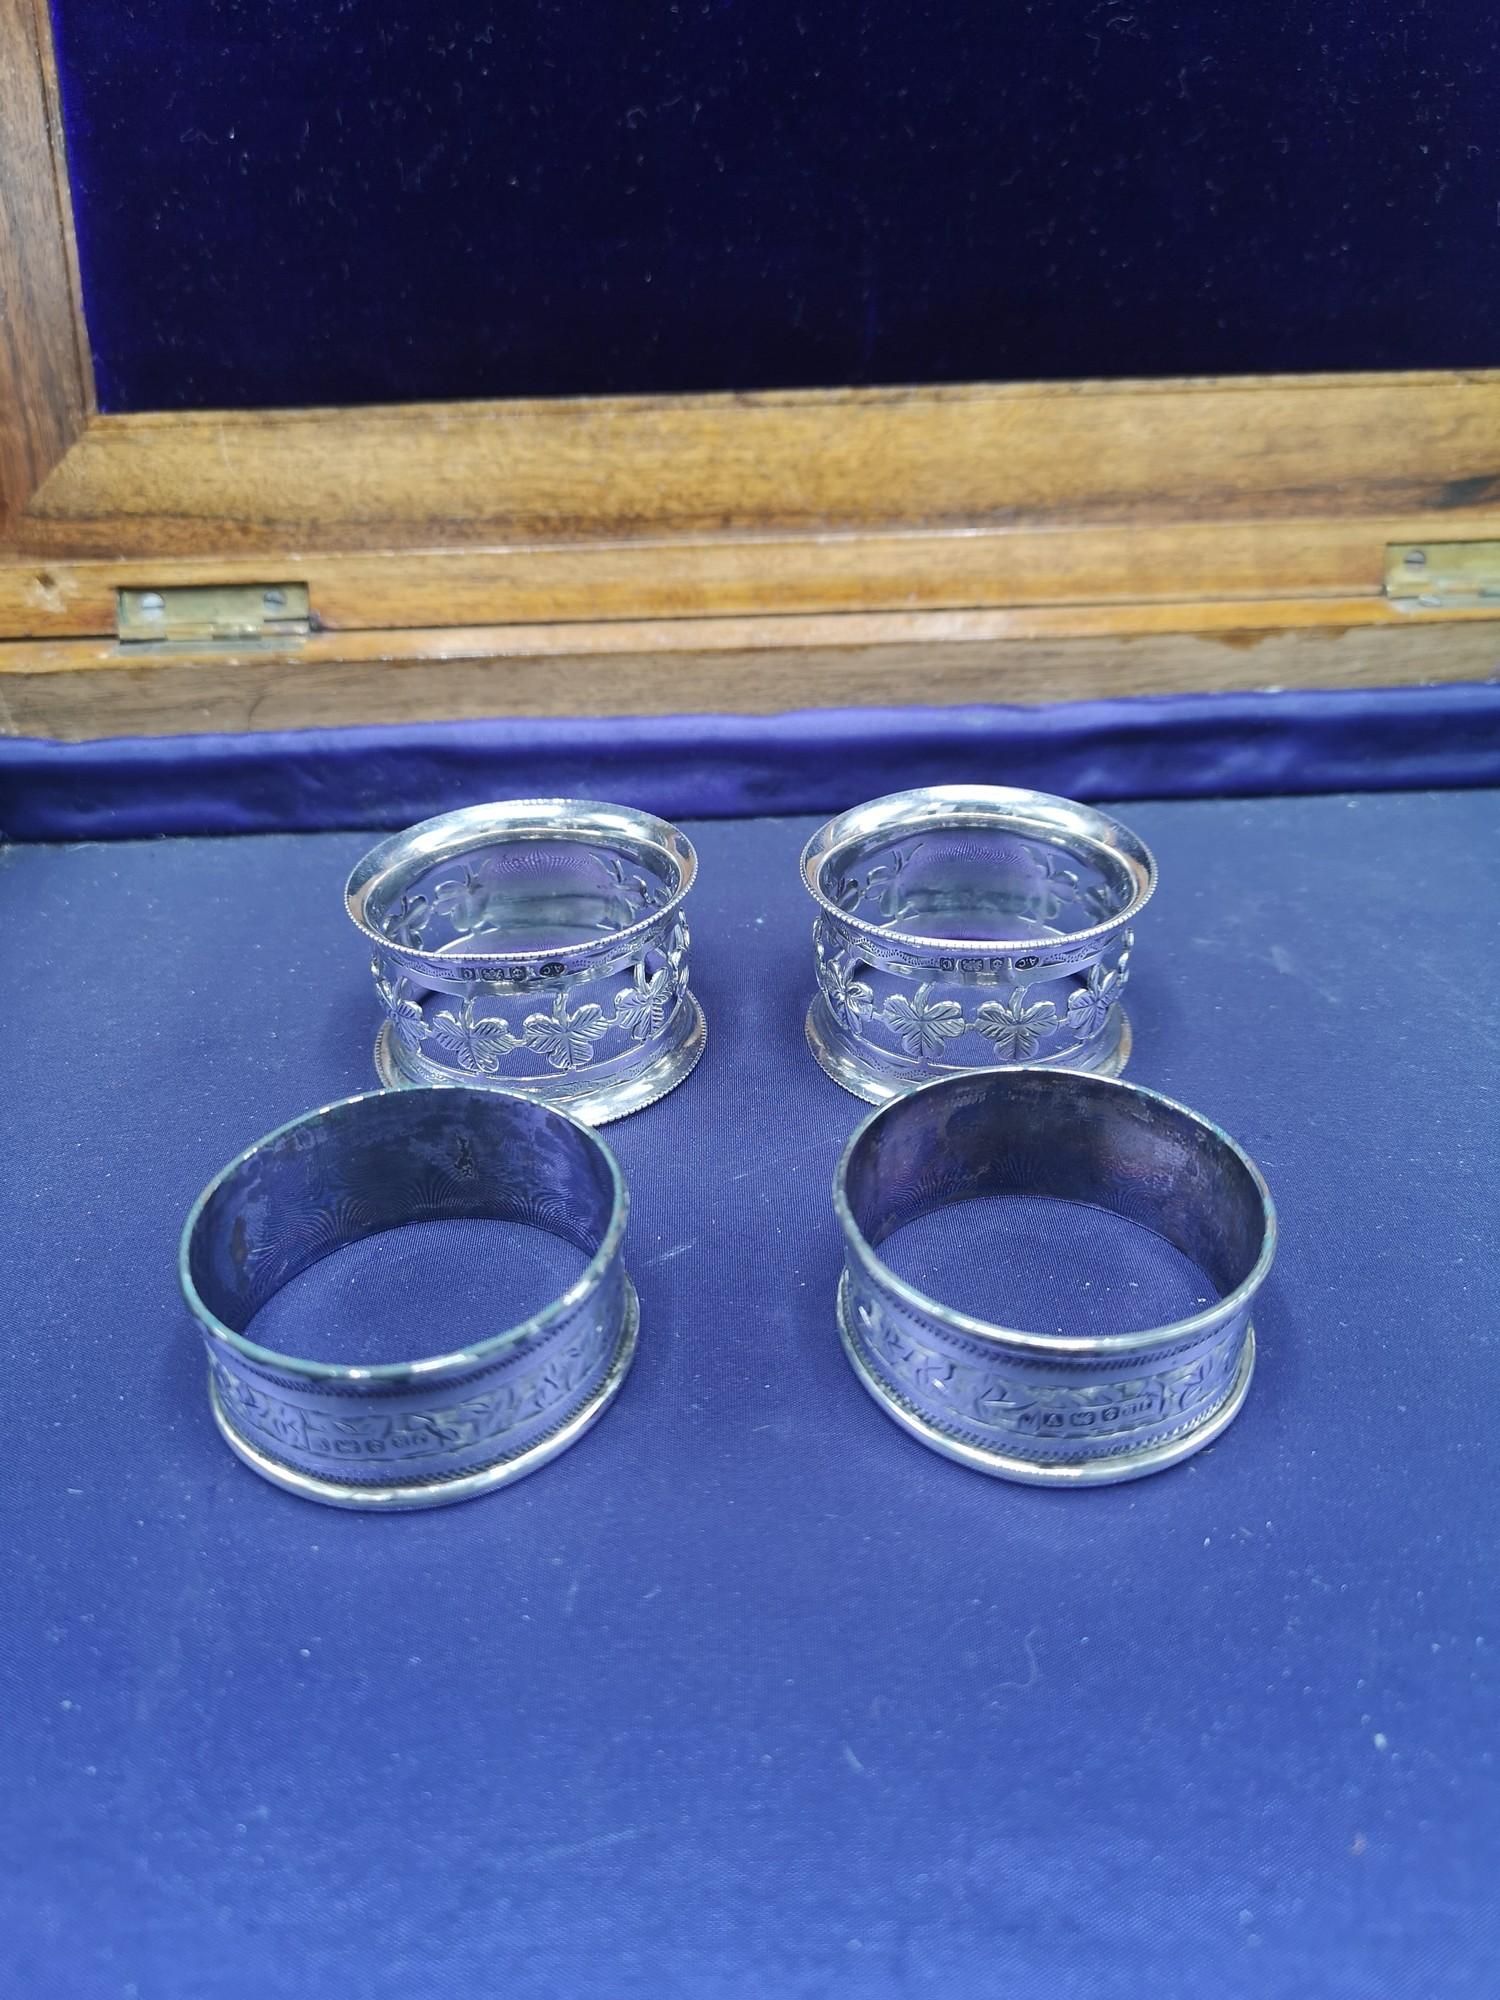 2 pairs of silver napkin rings including Irish.